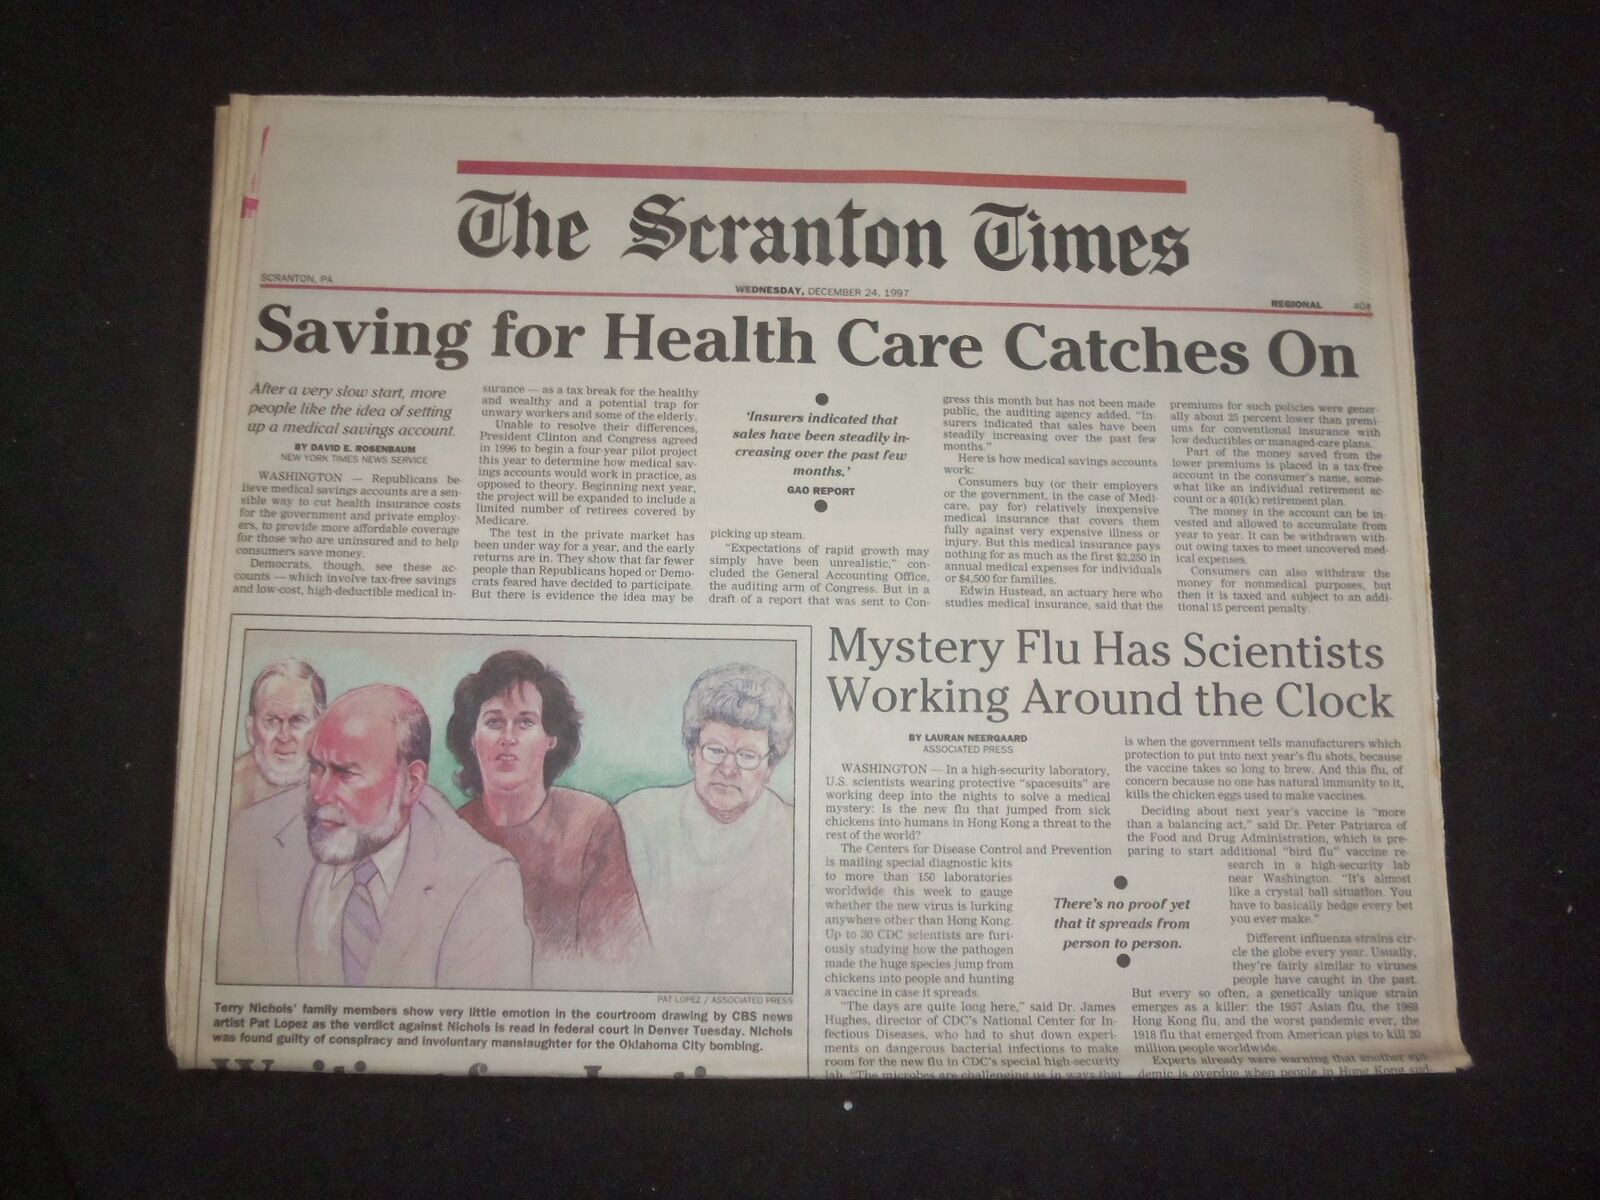 1997 DECEMBER 24 THE SCRANTON TIMES NEWSPAPER - SAVING FOR HEALTH CARE - NP 8375